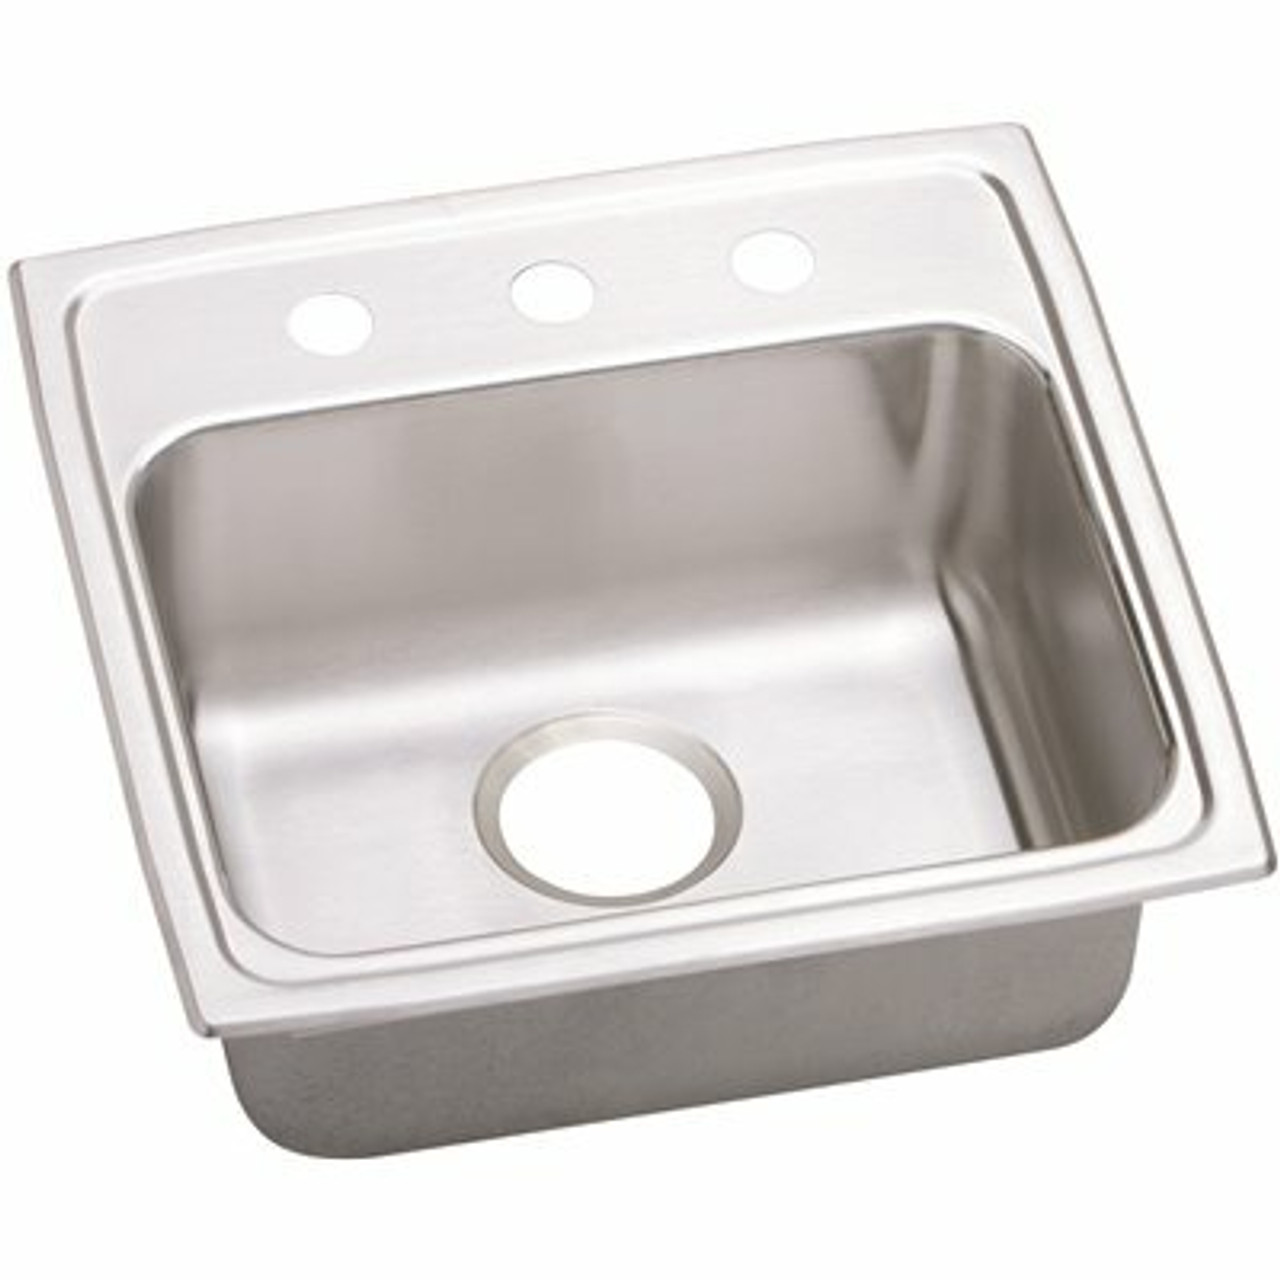 Elkay Lustertone Drop-In Stainless Steel 20 In. 3-Hole Single Bowl Ada Compliant Kitchen Sink With 5.5 In. Bowl